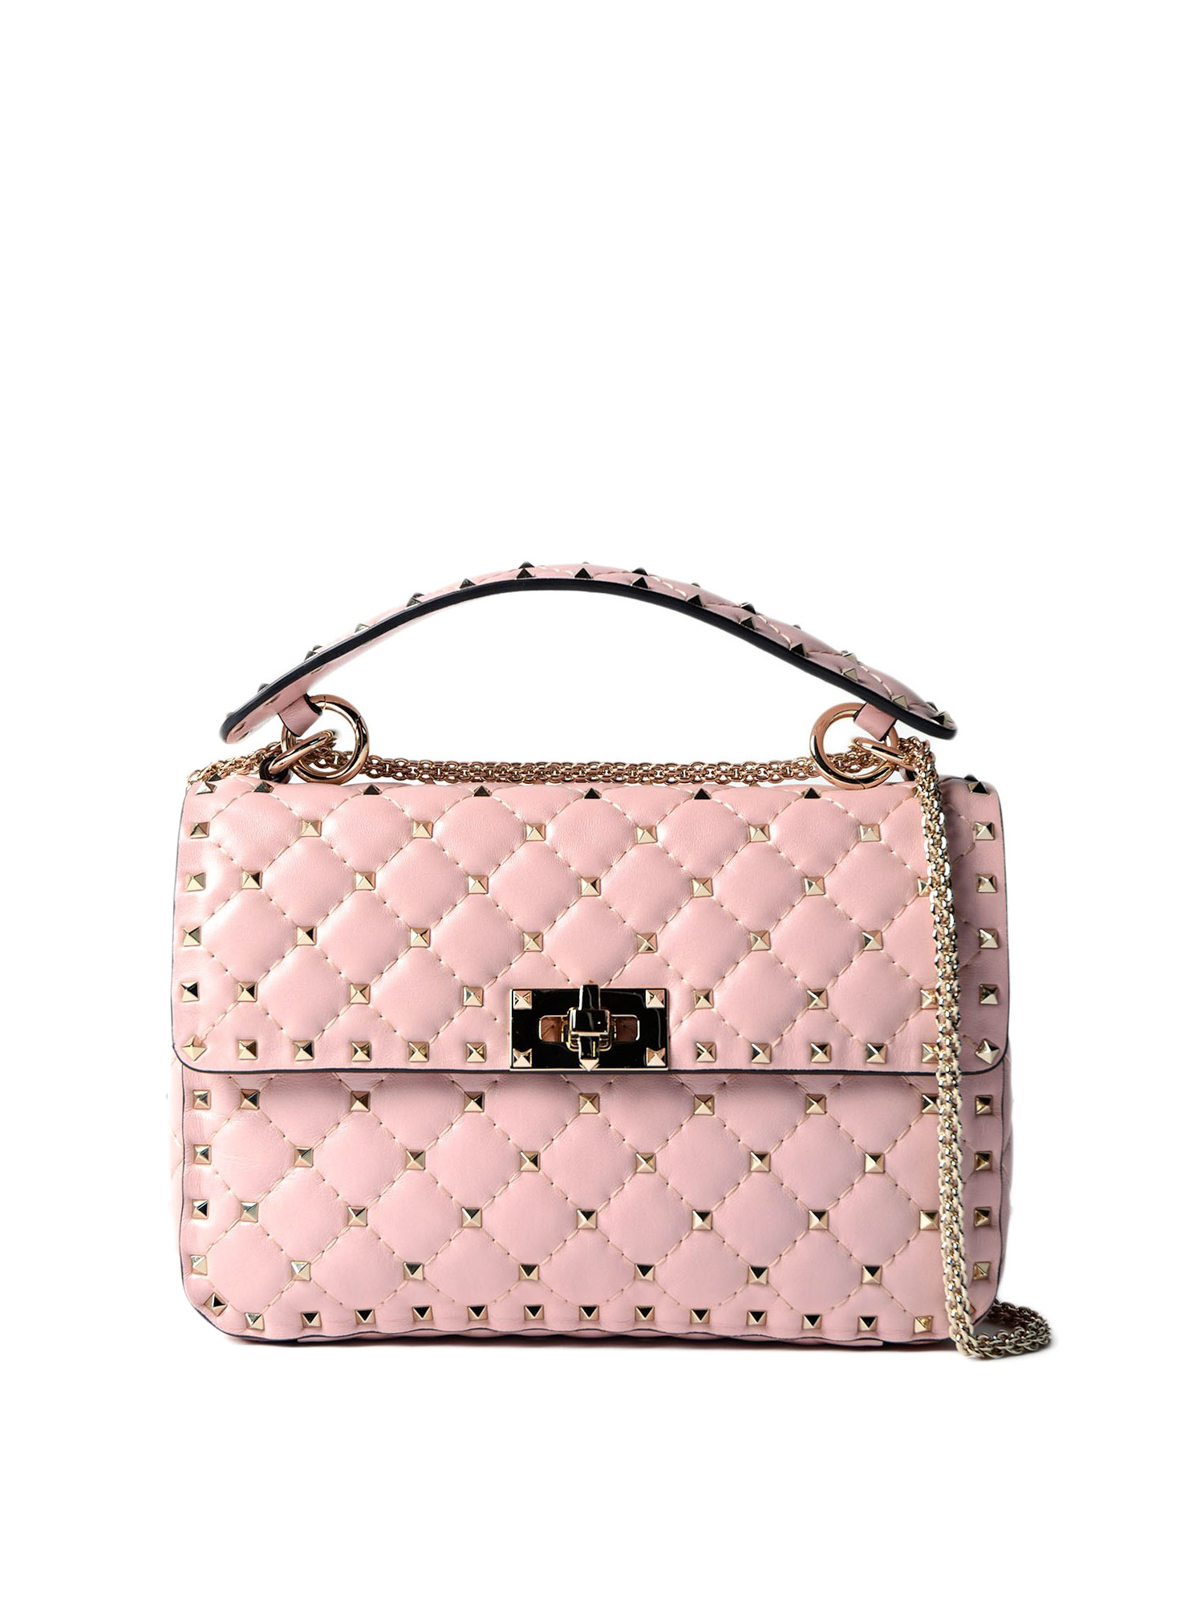 Rockstud Medium Leather Tote Bag in Pink - Valentino Garavani